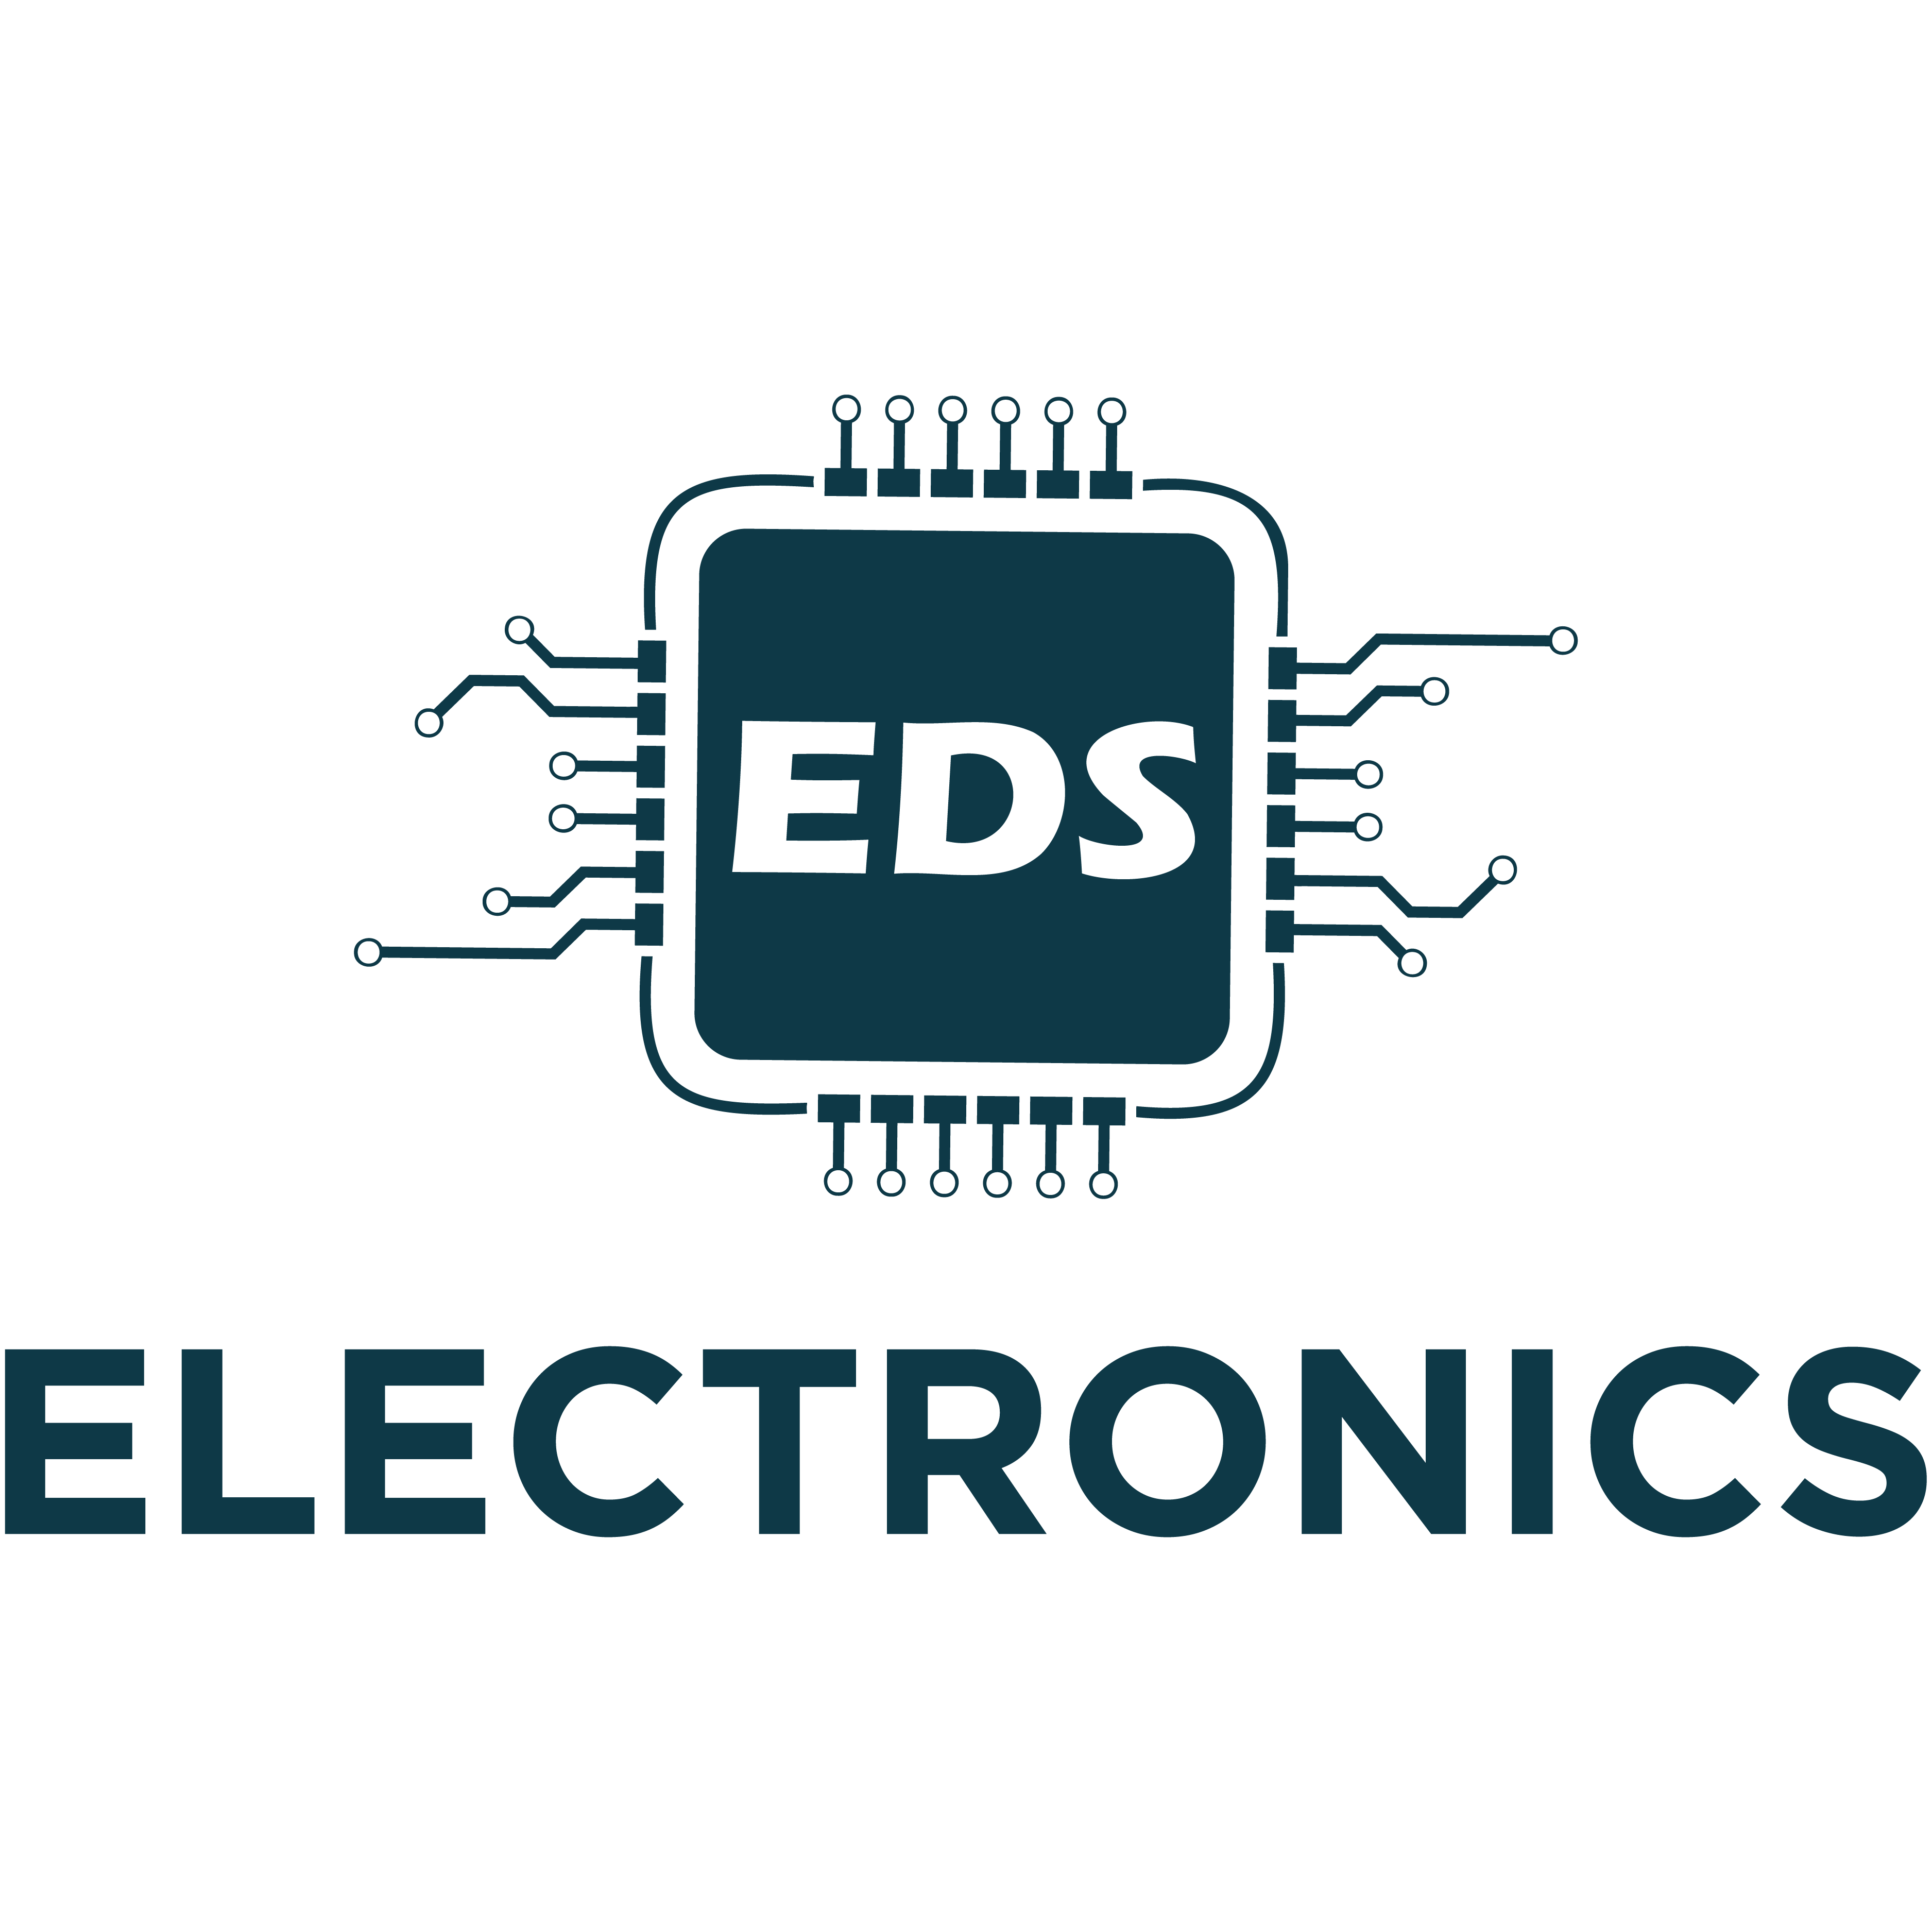 EDS Electronics Innovation and development